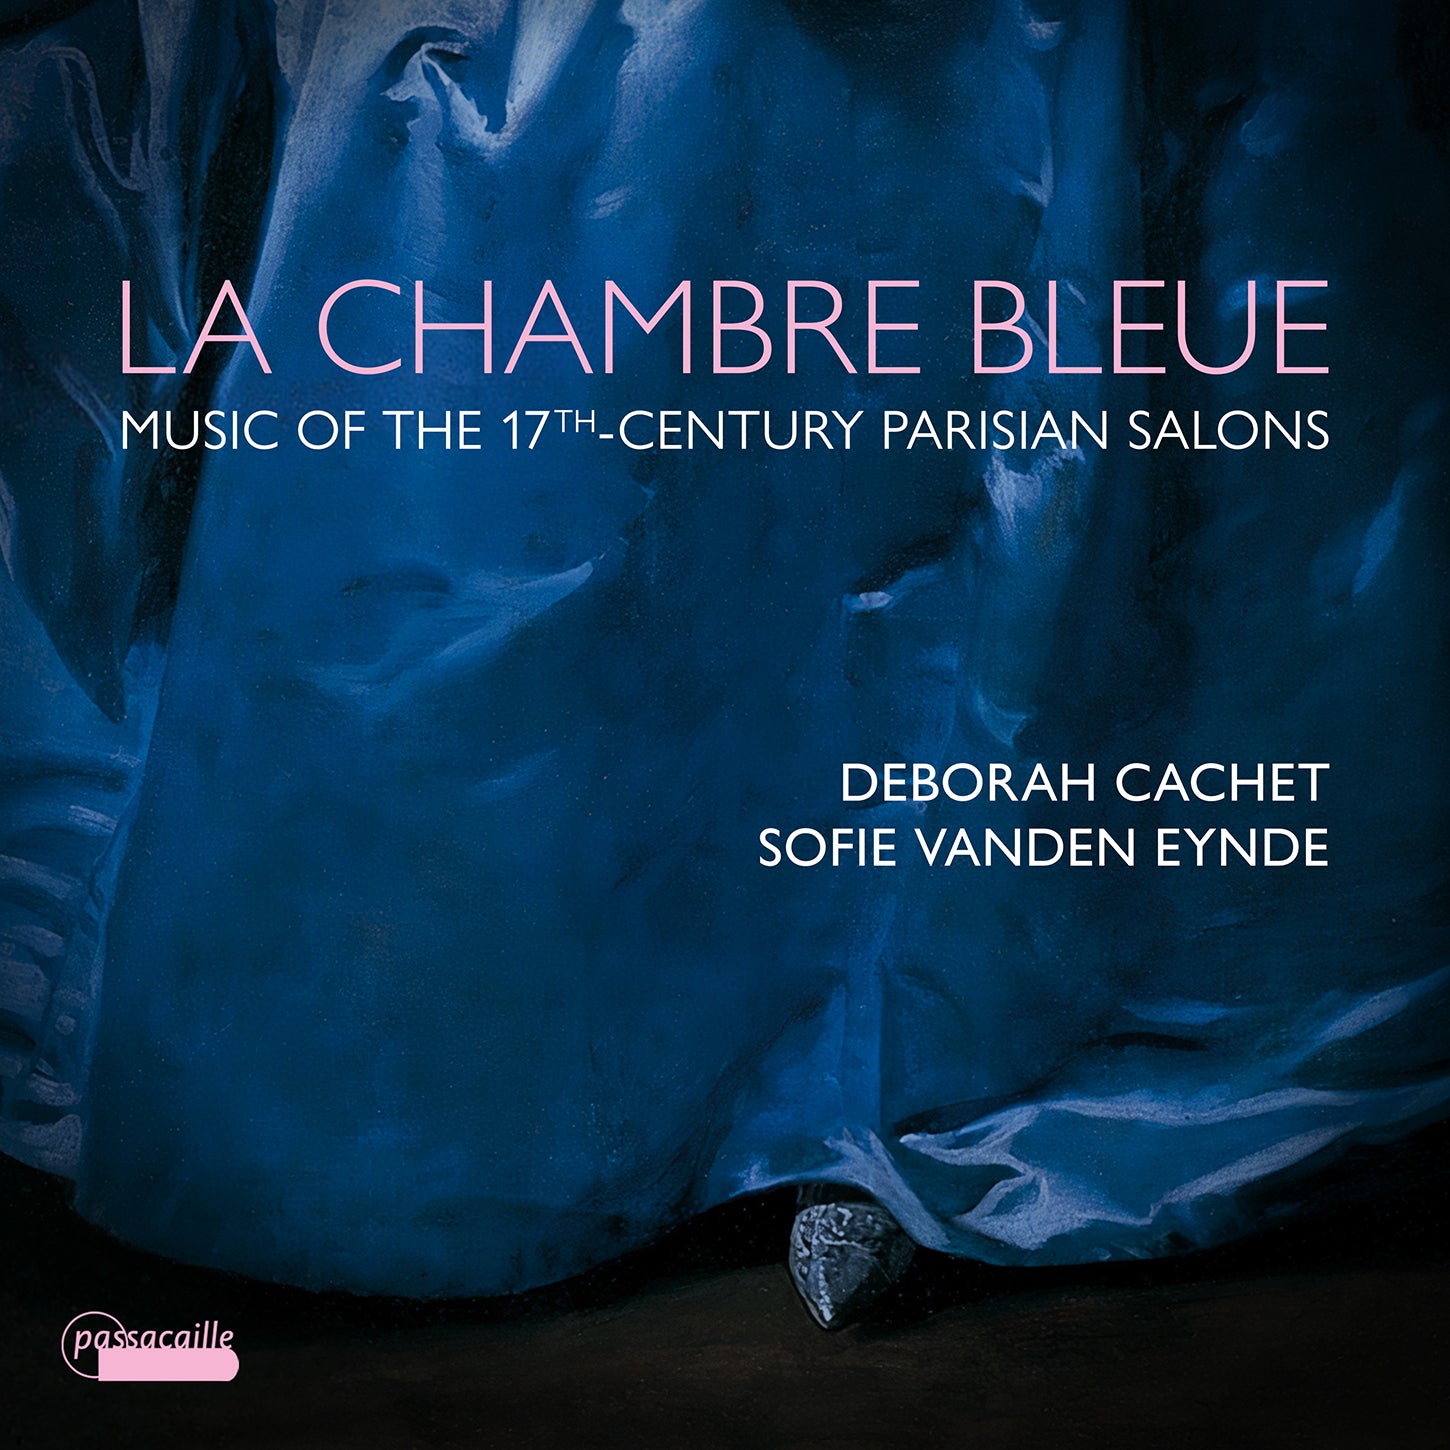 La chambre bleue - Music of 17th-Century Parisian Salons / Cachet, Vanden Eynde